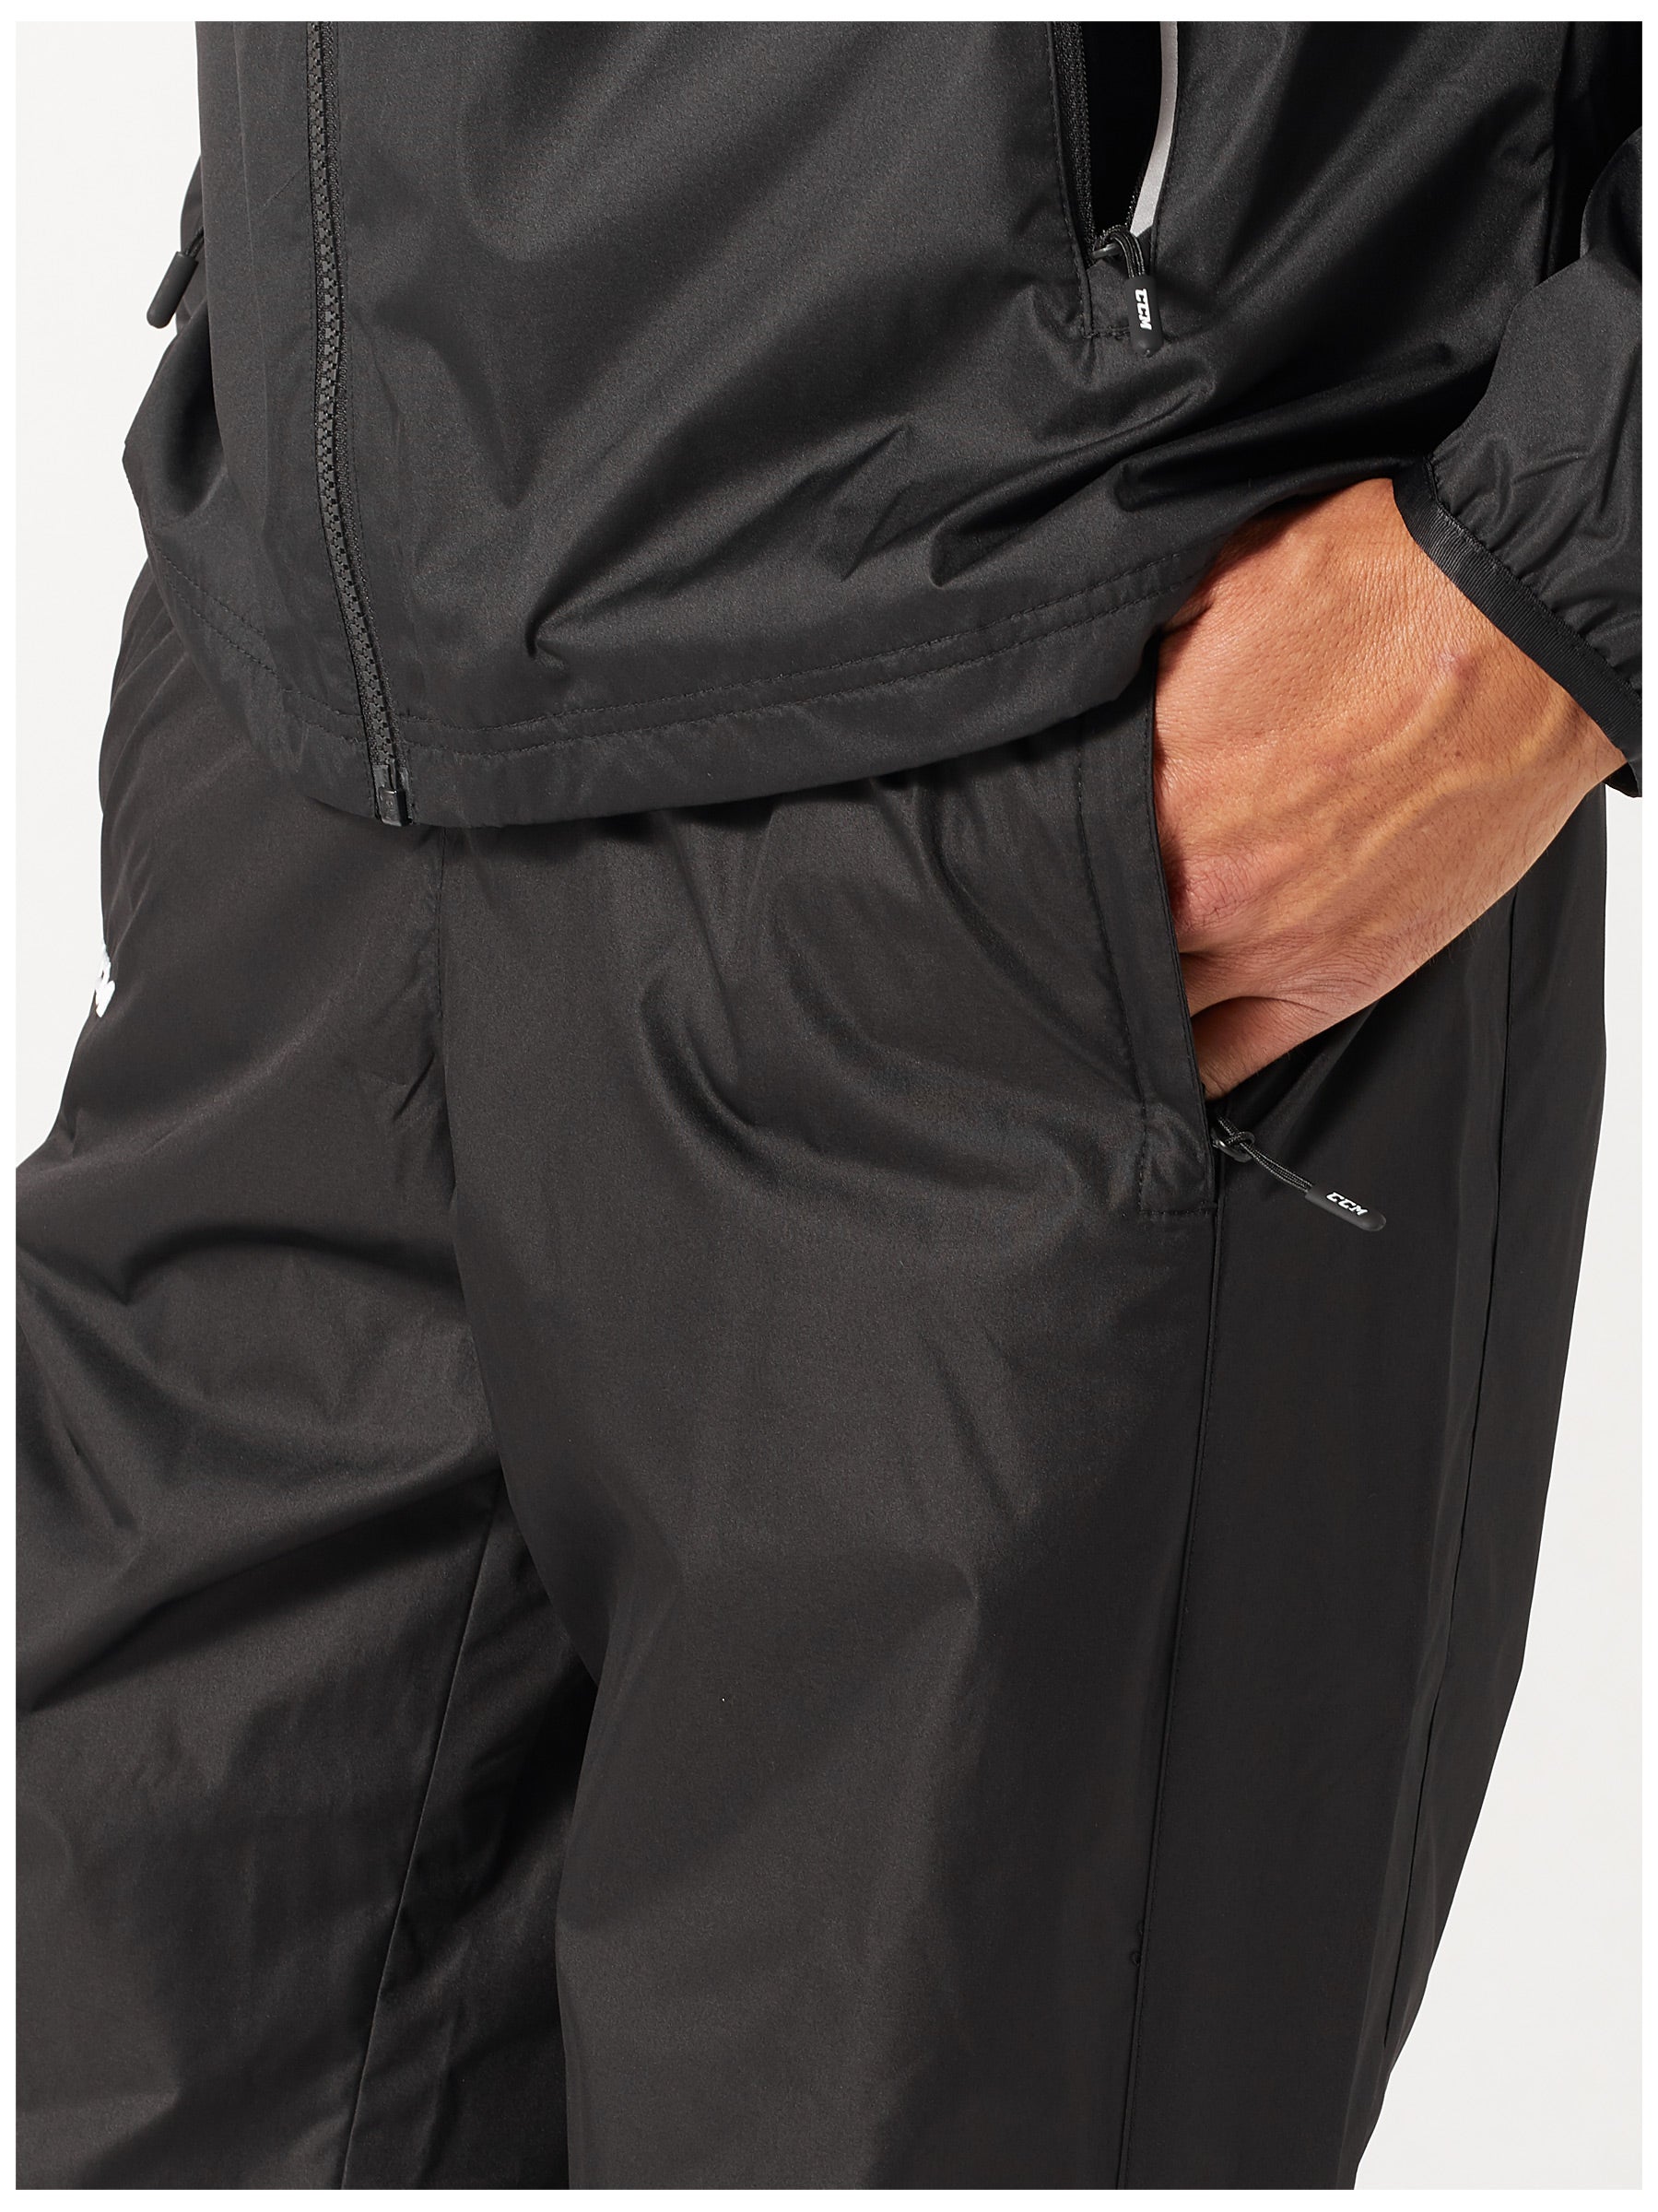 CCM Hockey Lightweight Warm Up Pant Rink Suit CCM Pant 